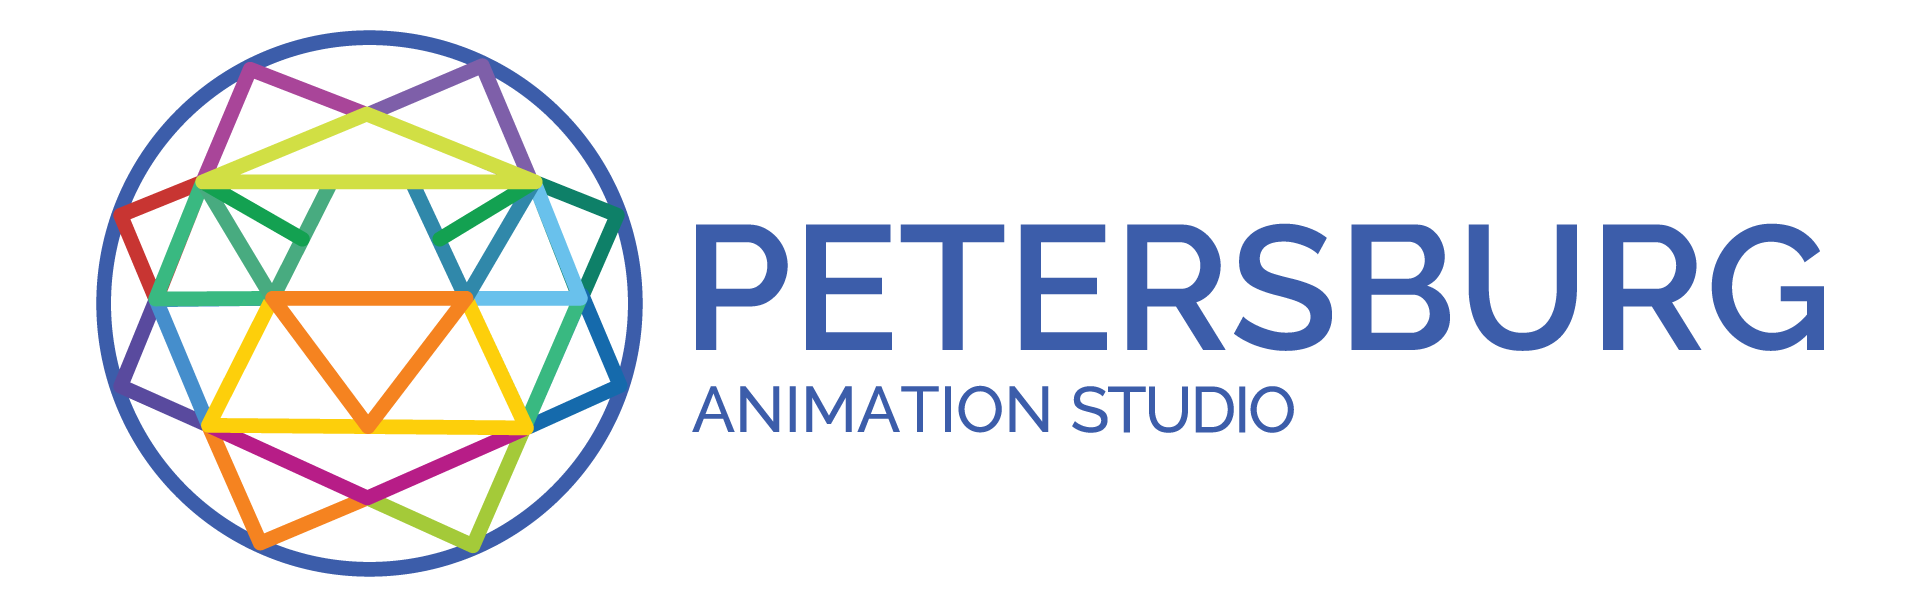 Creating Animations